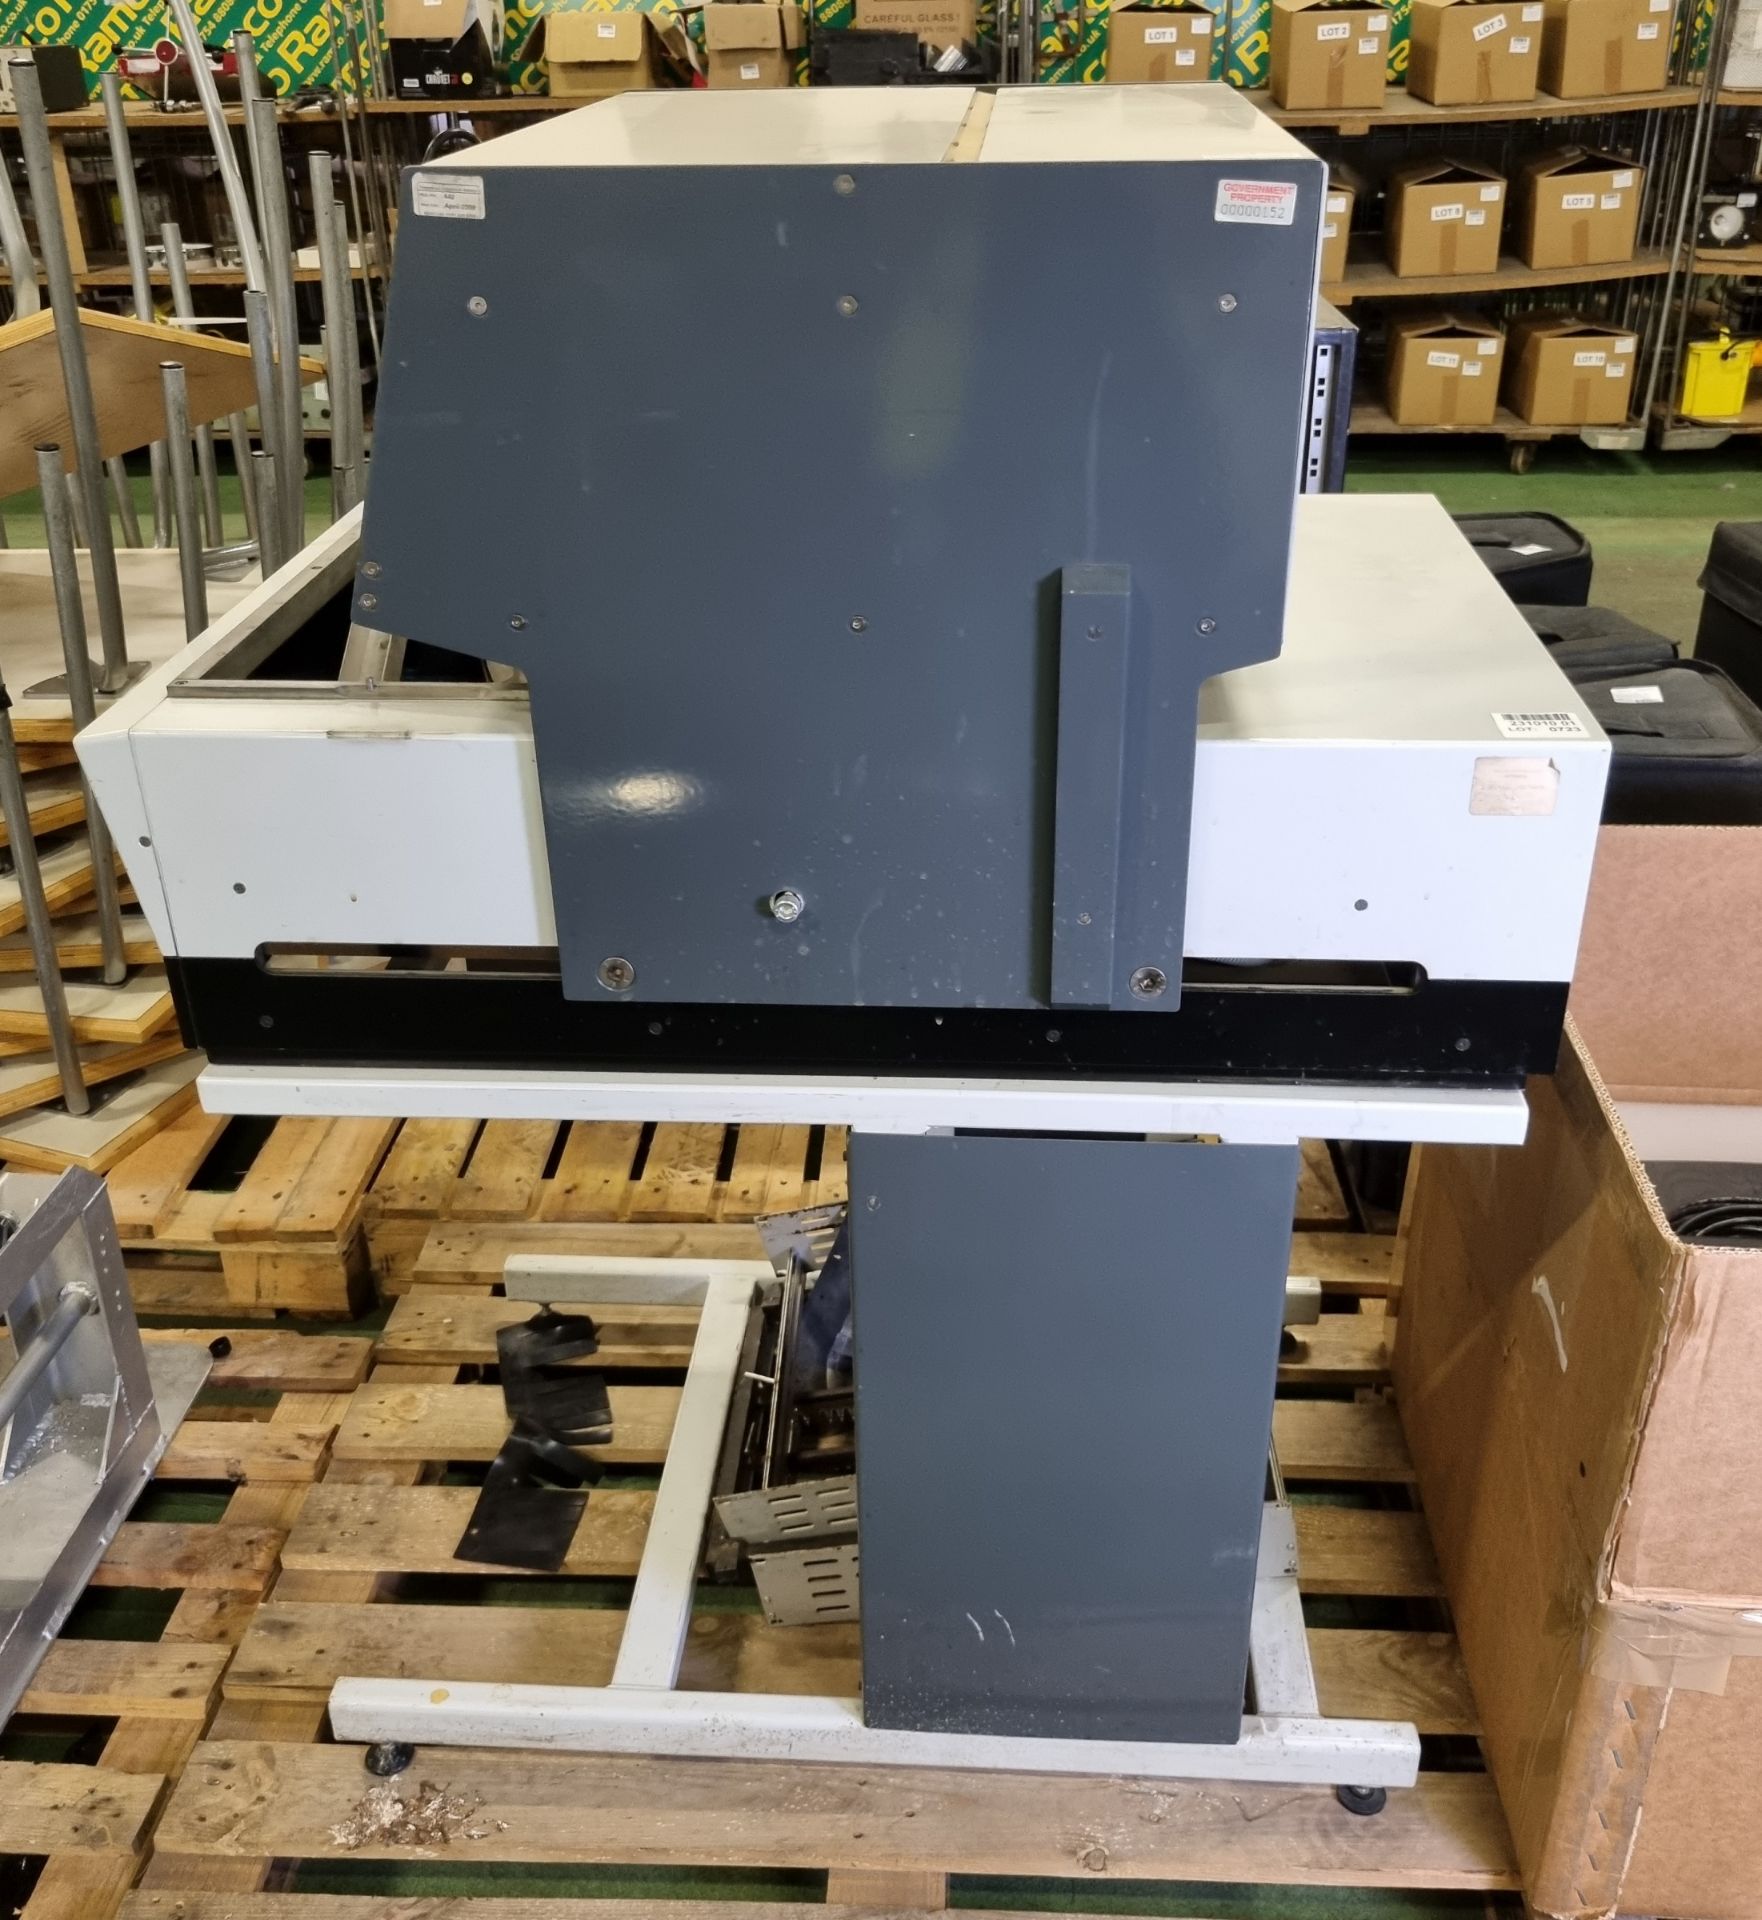 Blundell Production Equipment Cropmatic lead cutting machine - Serial No. 455 - 3 phase 415V 400W - Bild 5 aus 5